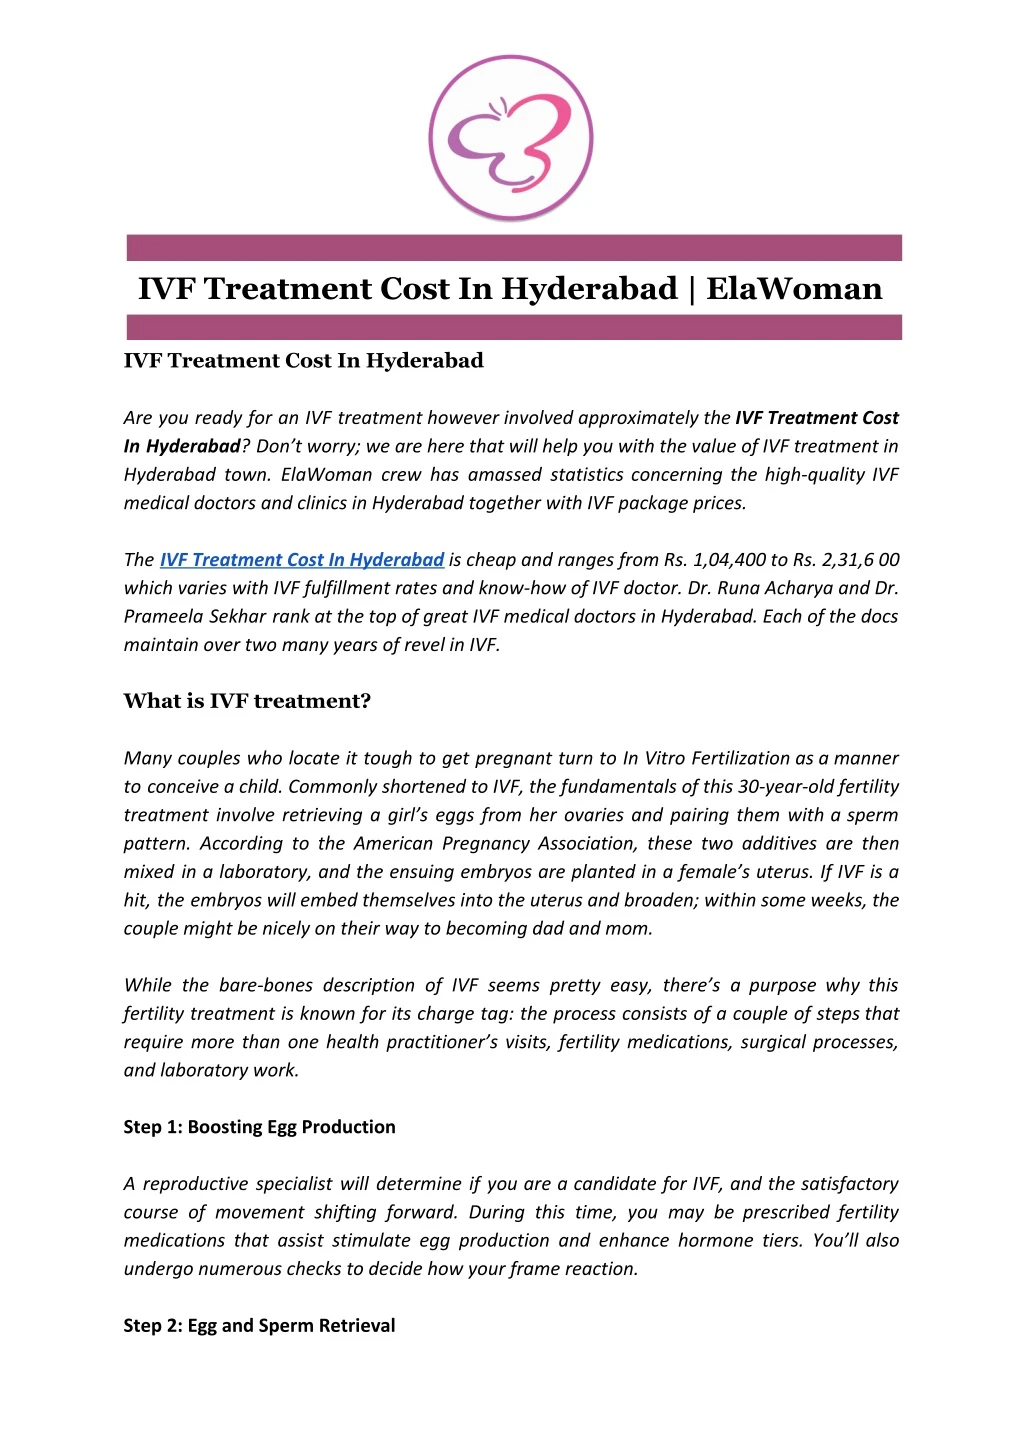 ivf treatment cost in hyderabad elawoman